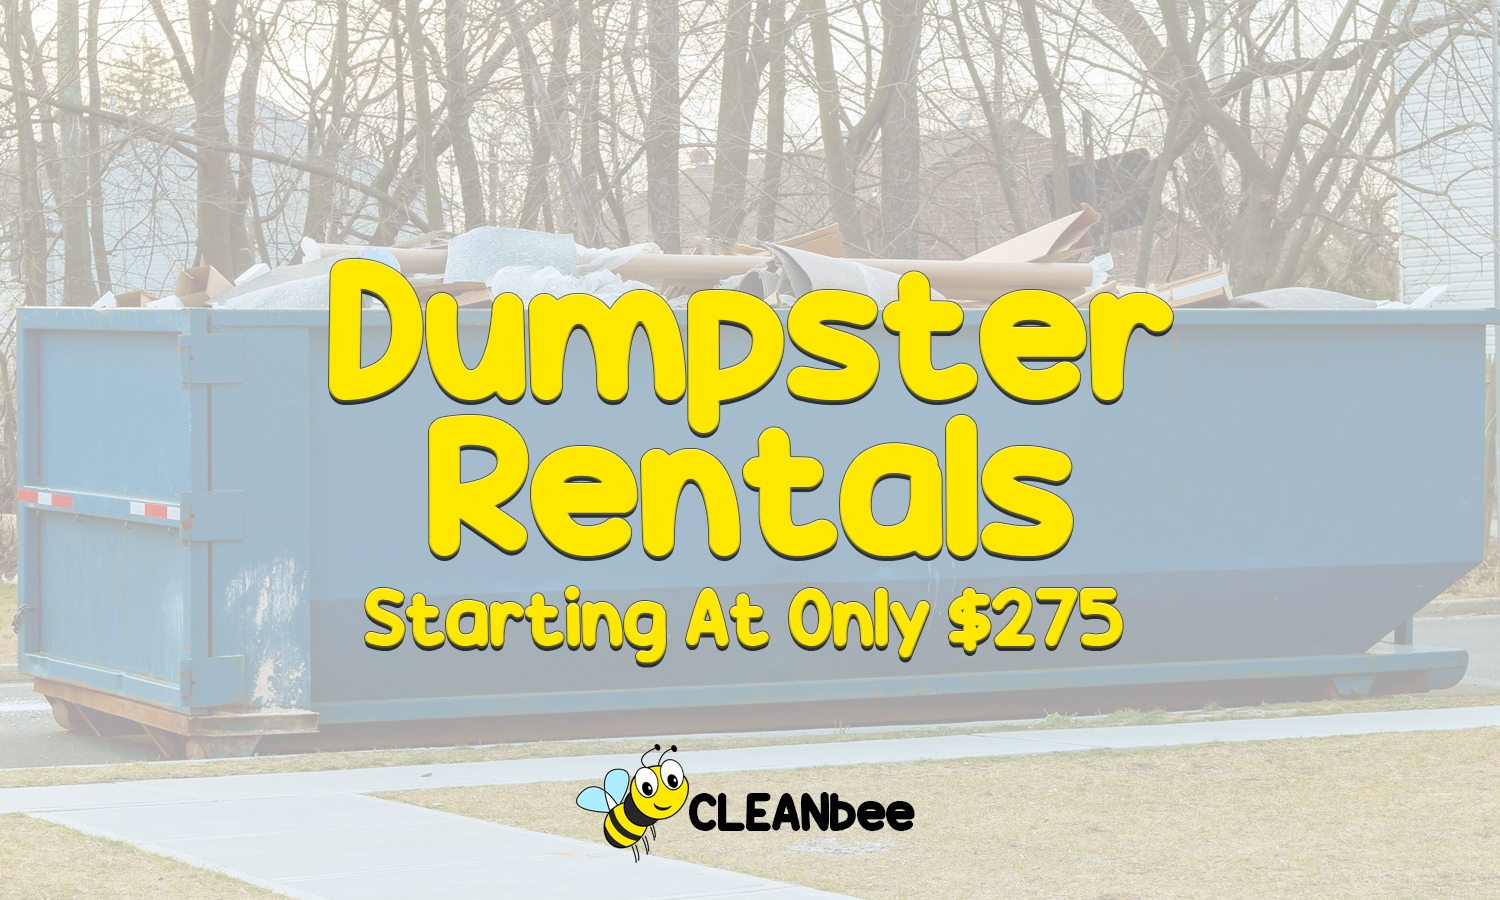 Dumpster Rental Starting At Only $275.